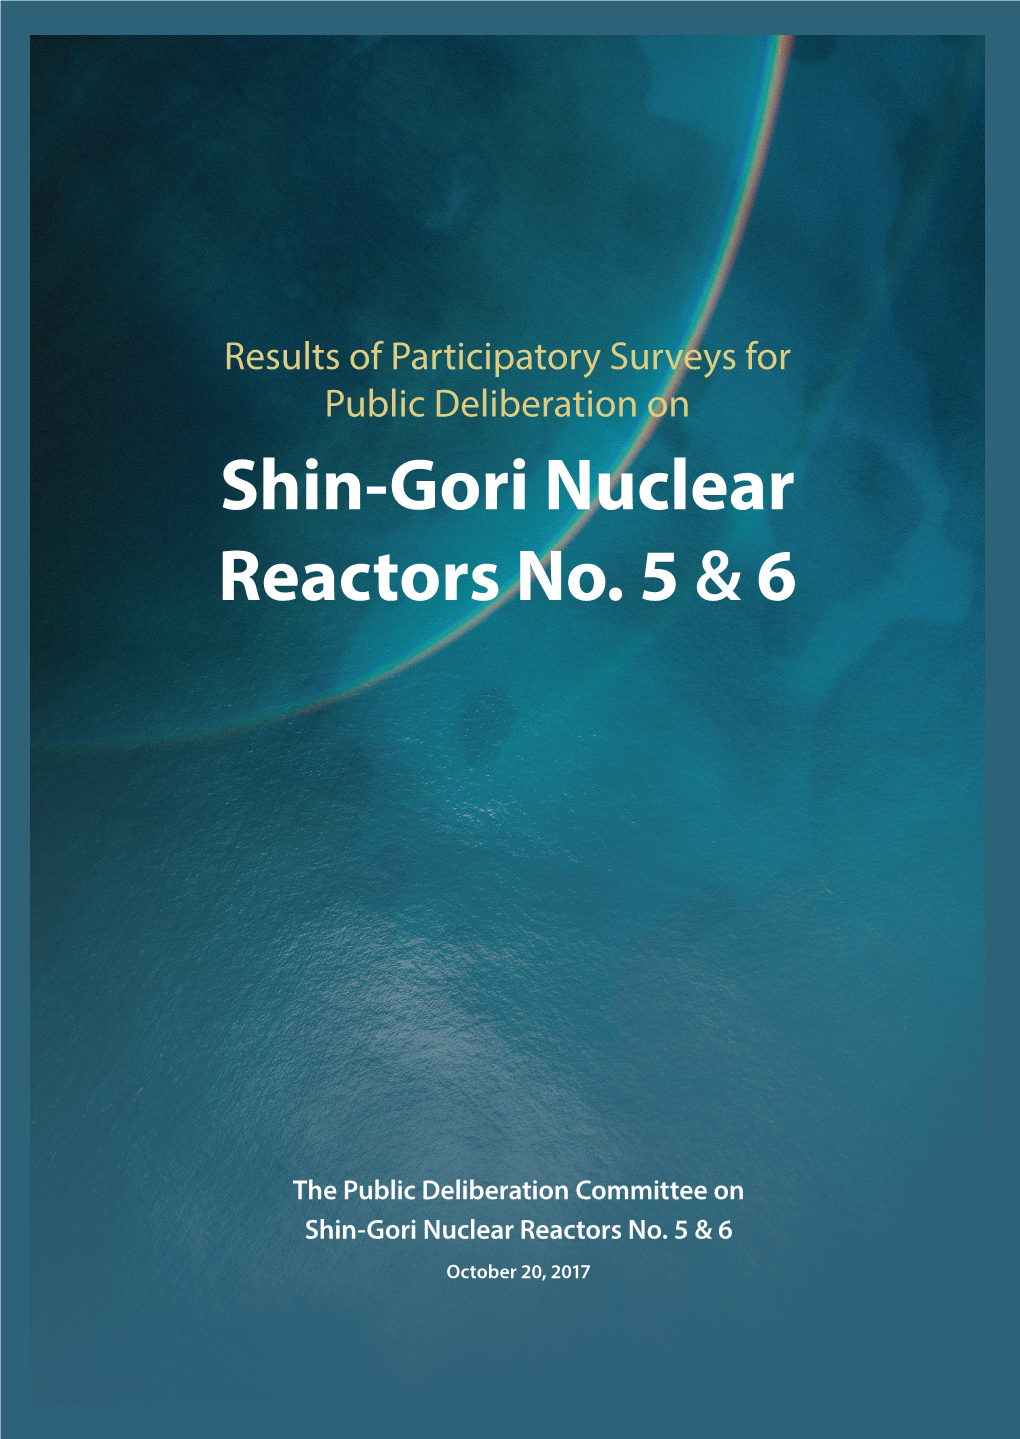 Shin-Gori Nuclear Reactors No. 5 & 6